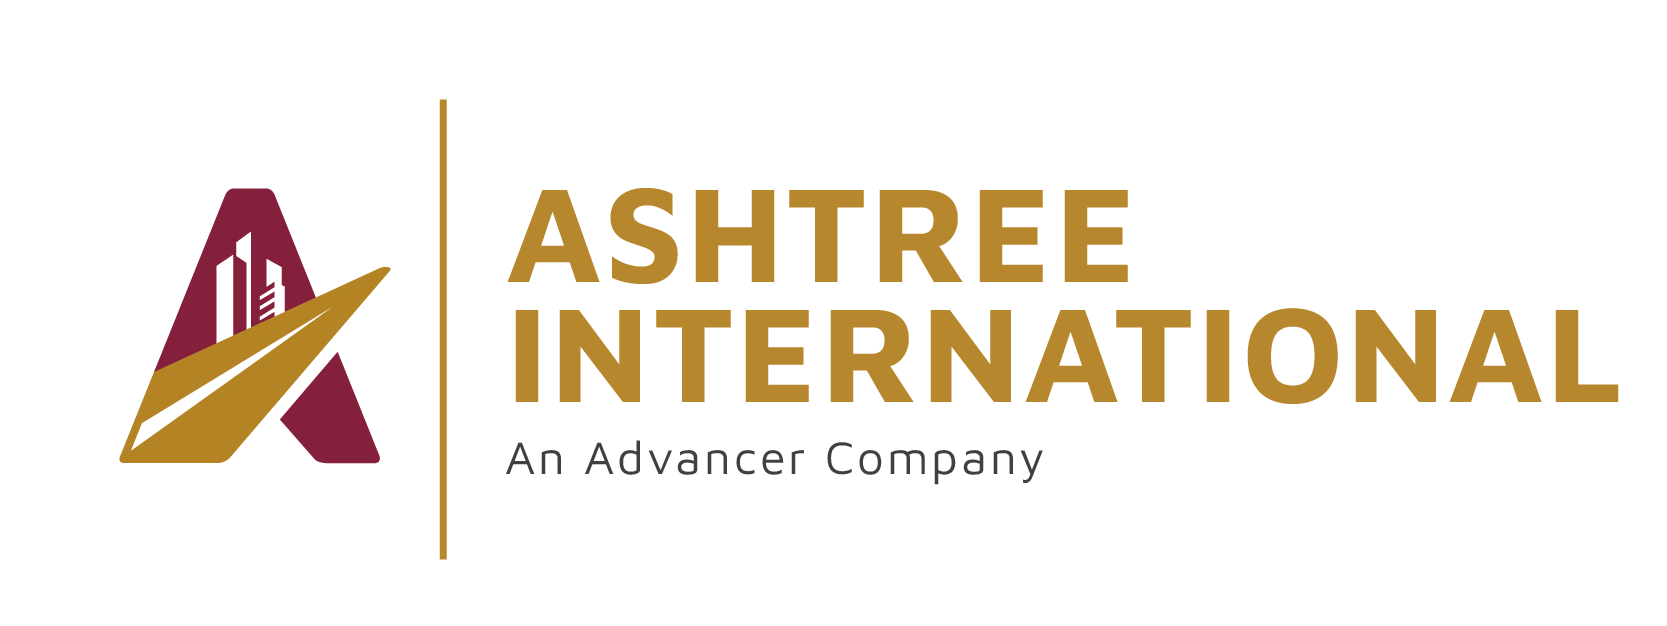 Ashtree International Pte Ltd